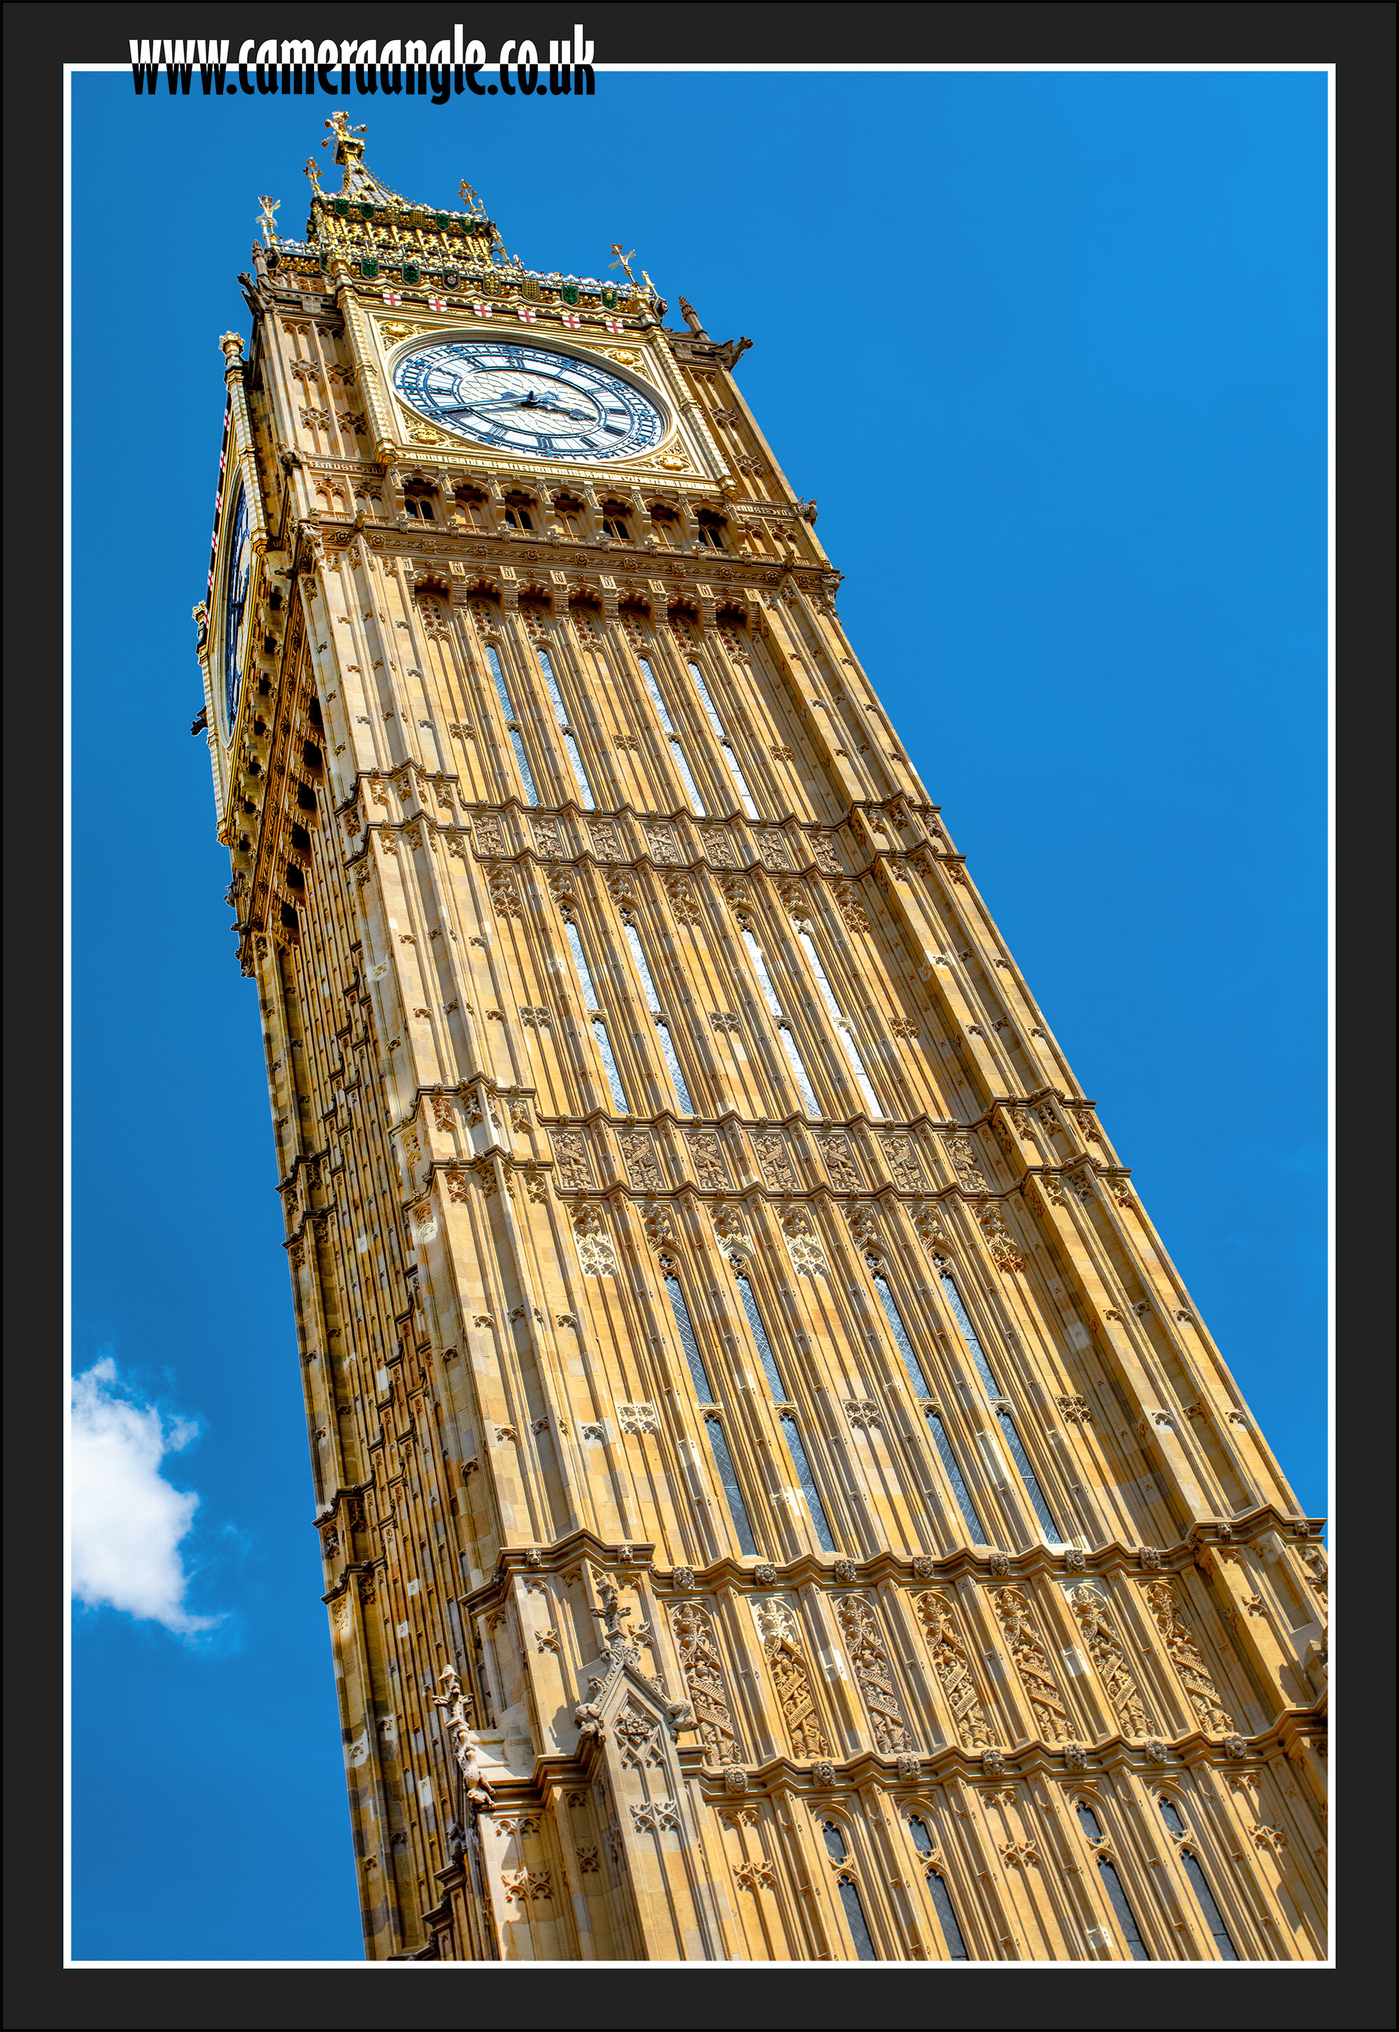 London_Big_Ben
Big Ben (and Elizabeth Tower) London
Keywords: Big Ben Elizabeth Tower London